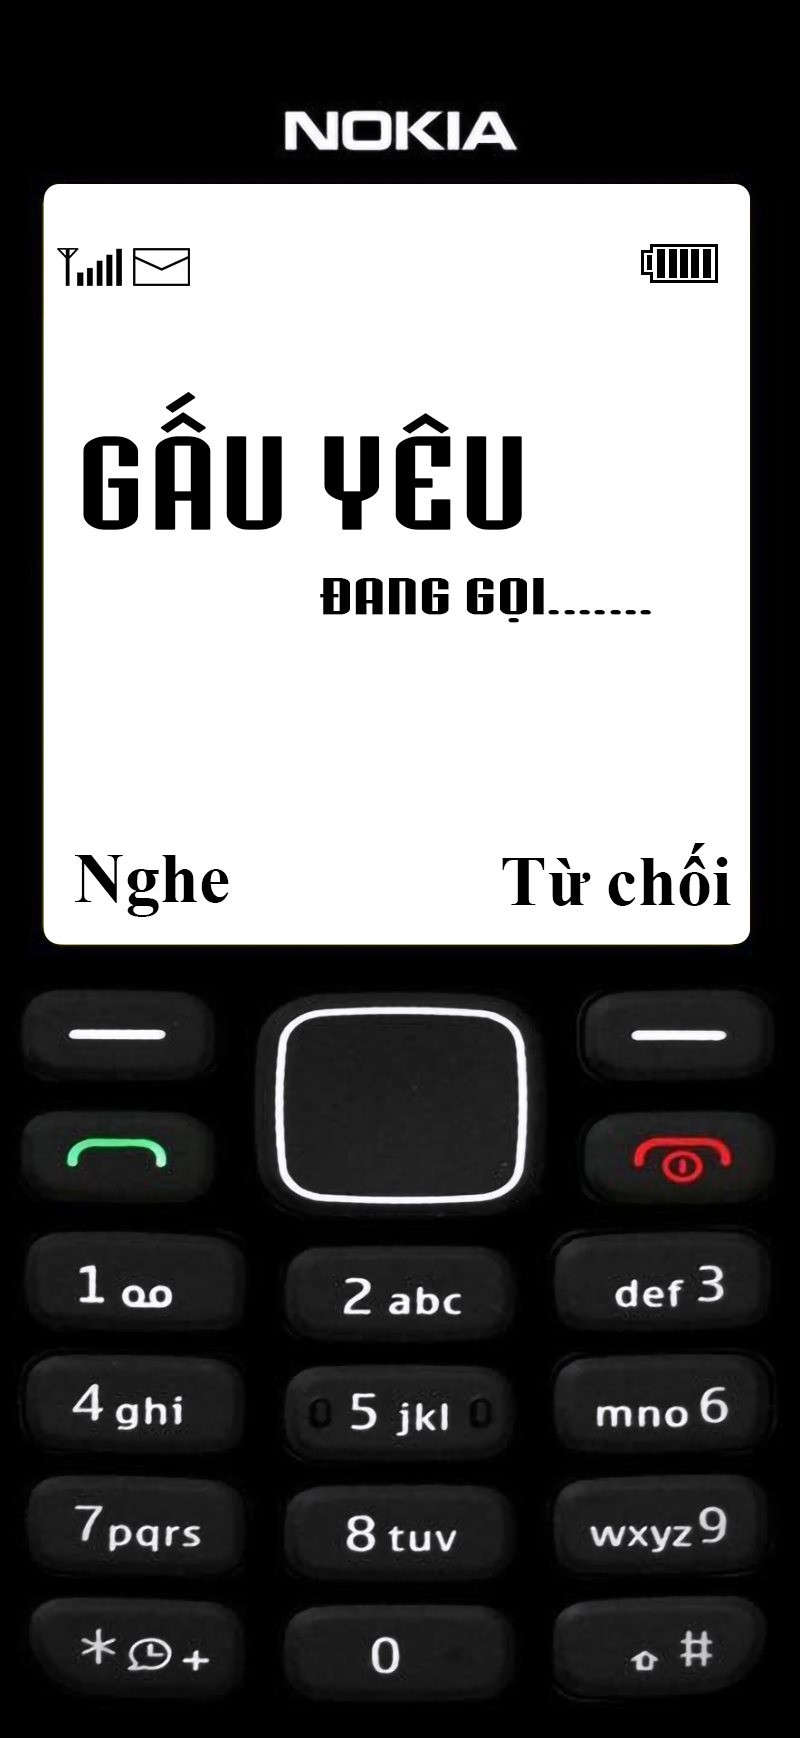 Tong hop hinh nen “cai trang” smartphone thanh Nokia 1280-Hinh-9